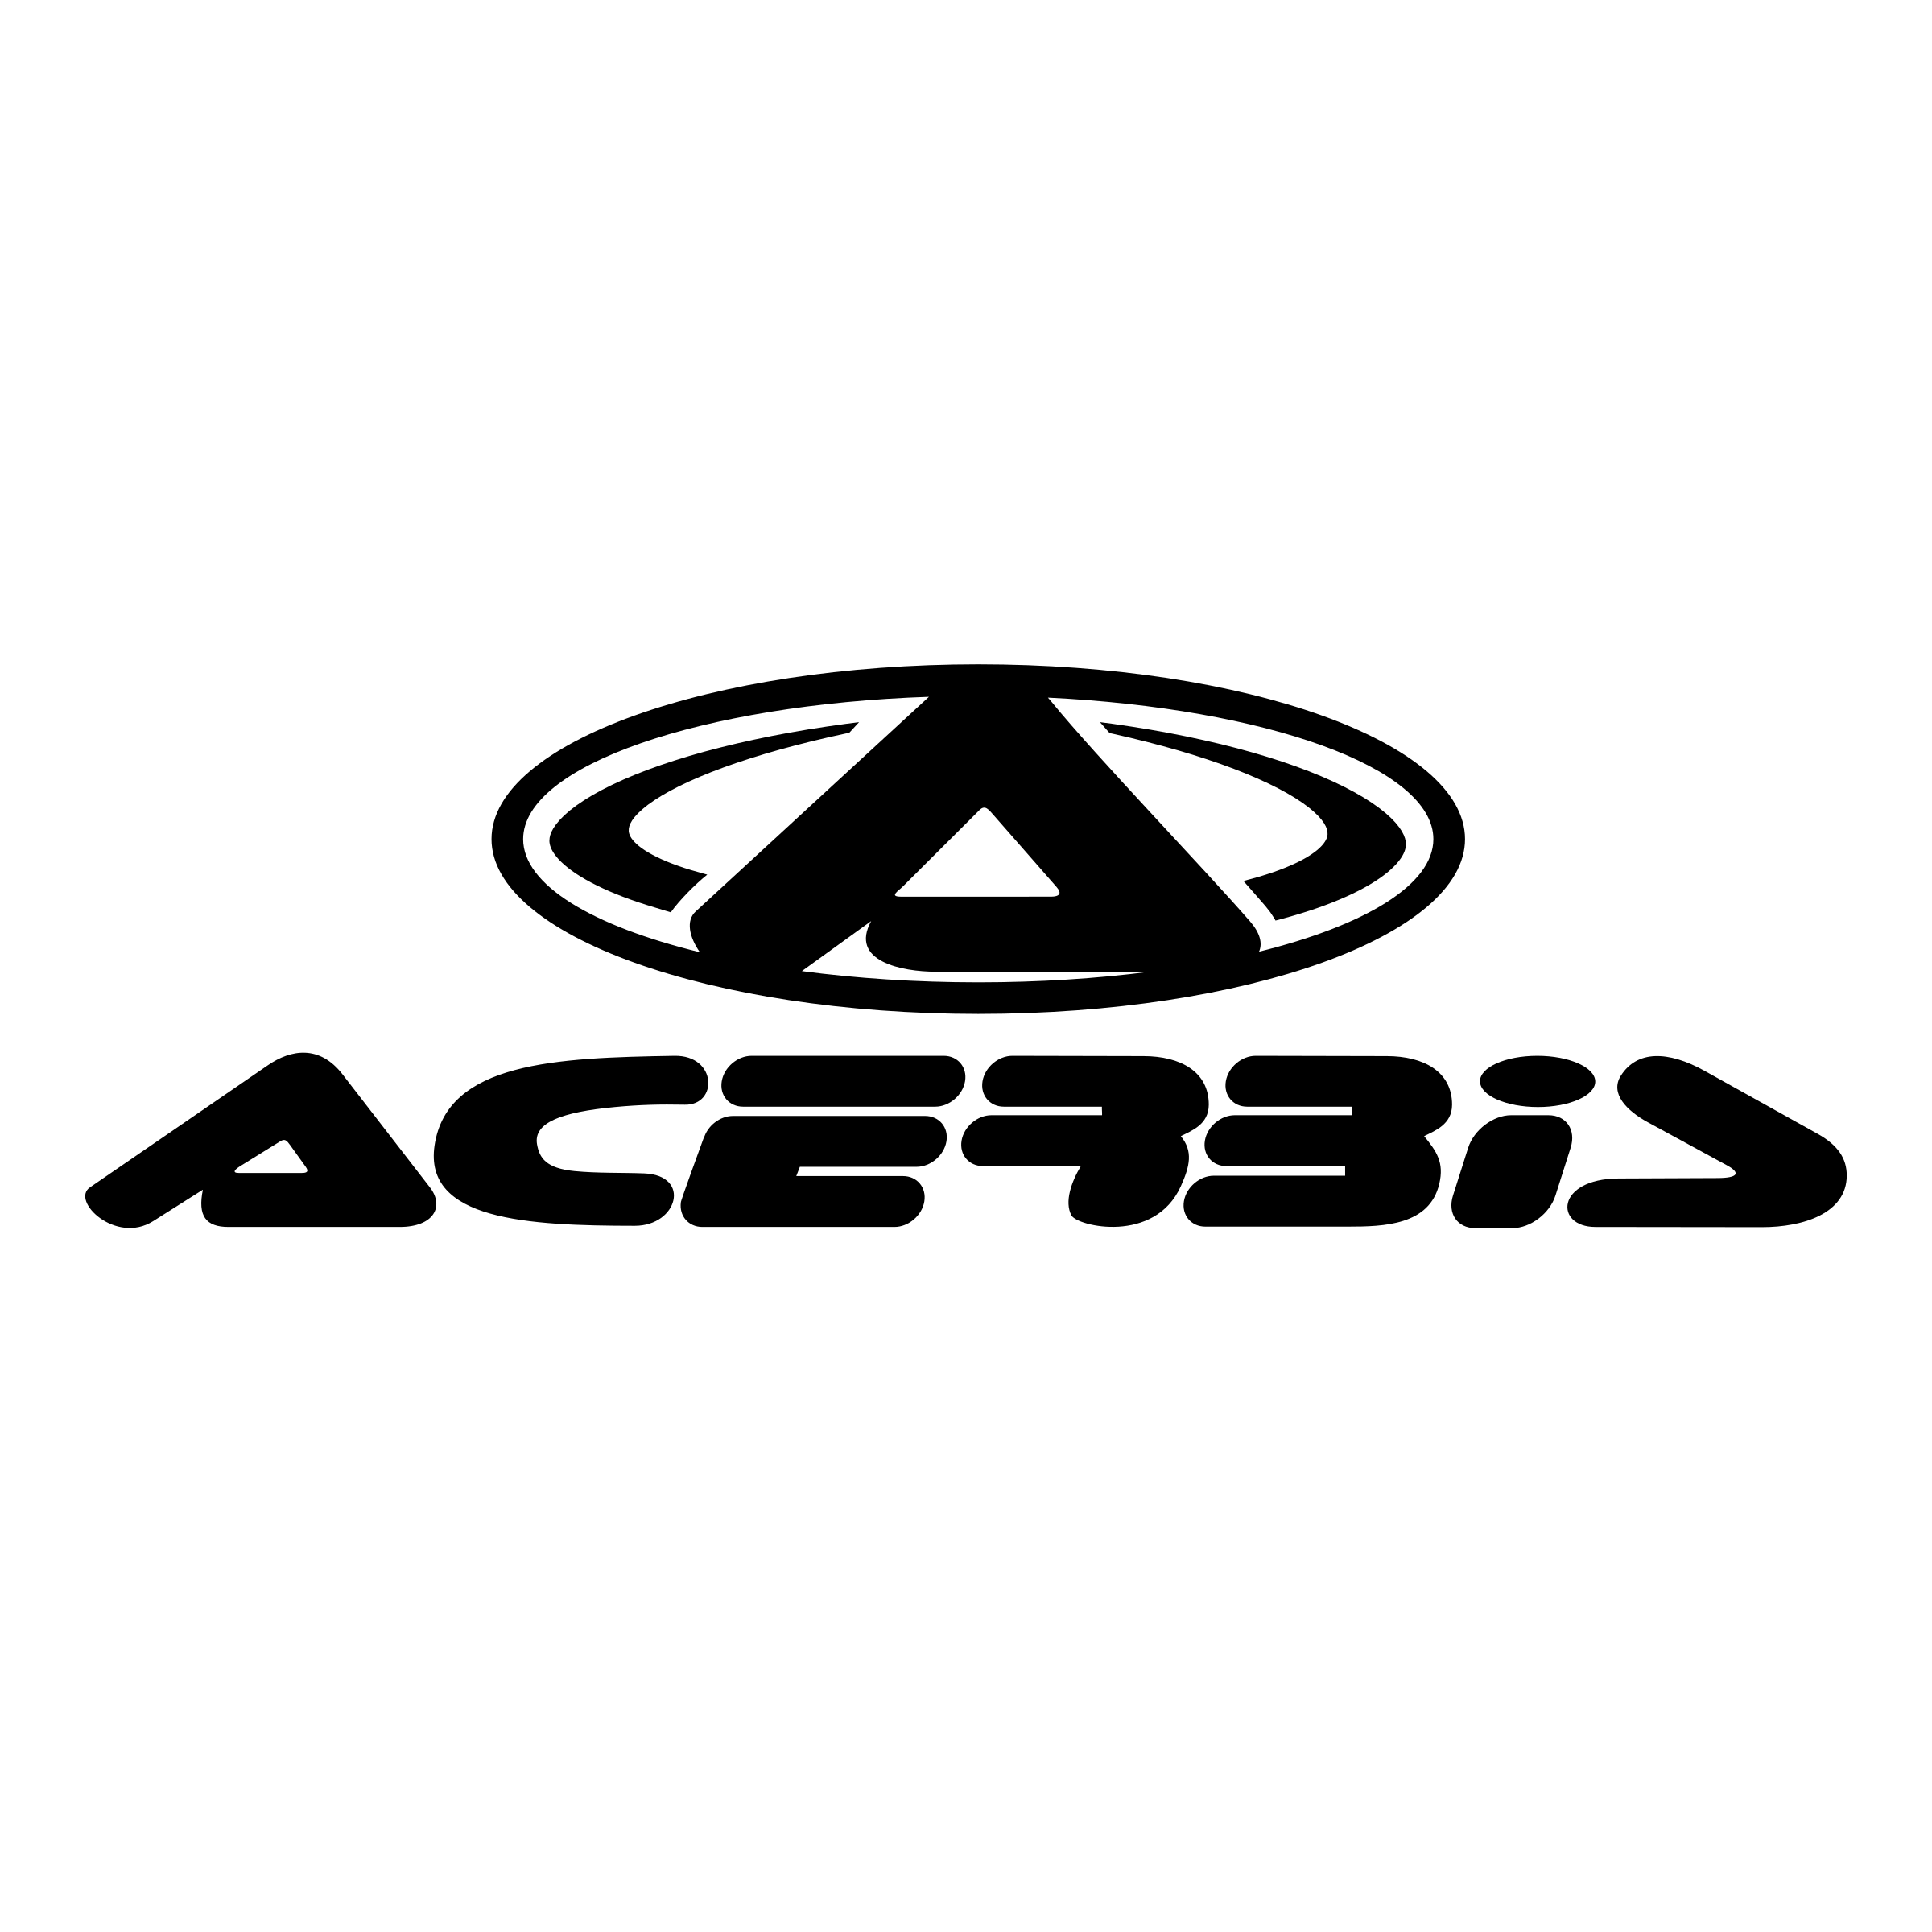 Acerbis Logo - Acerbis Logo PNG Transparent & SVG Vector - Freebie Supply